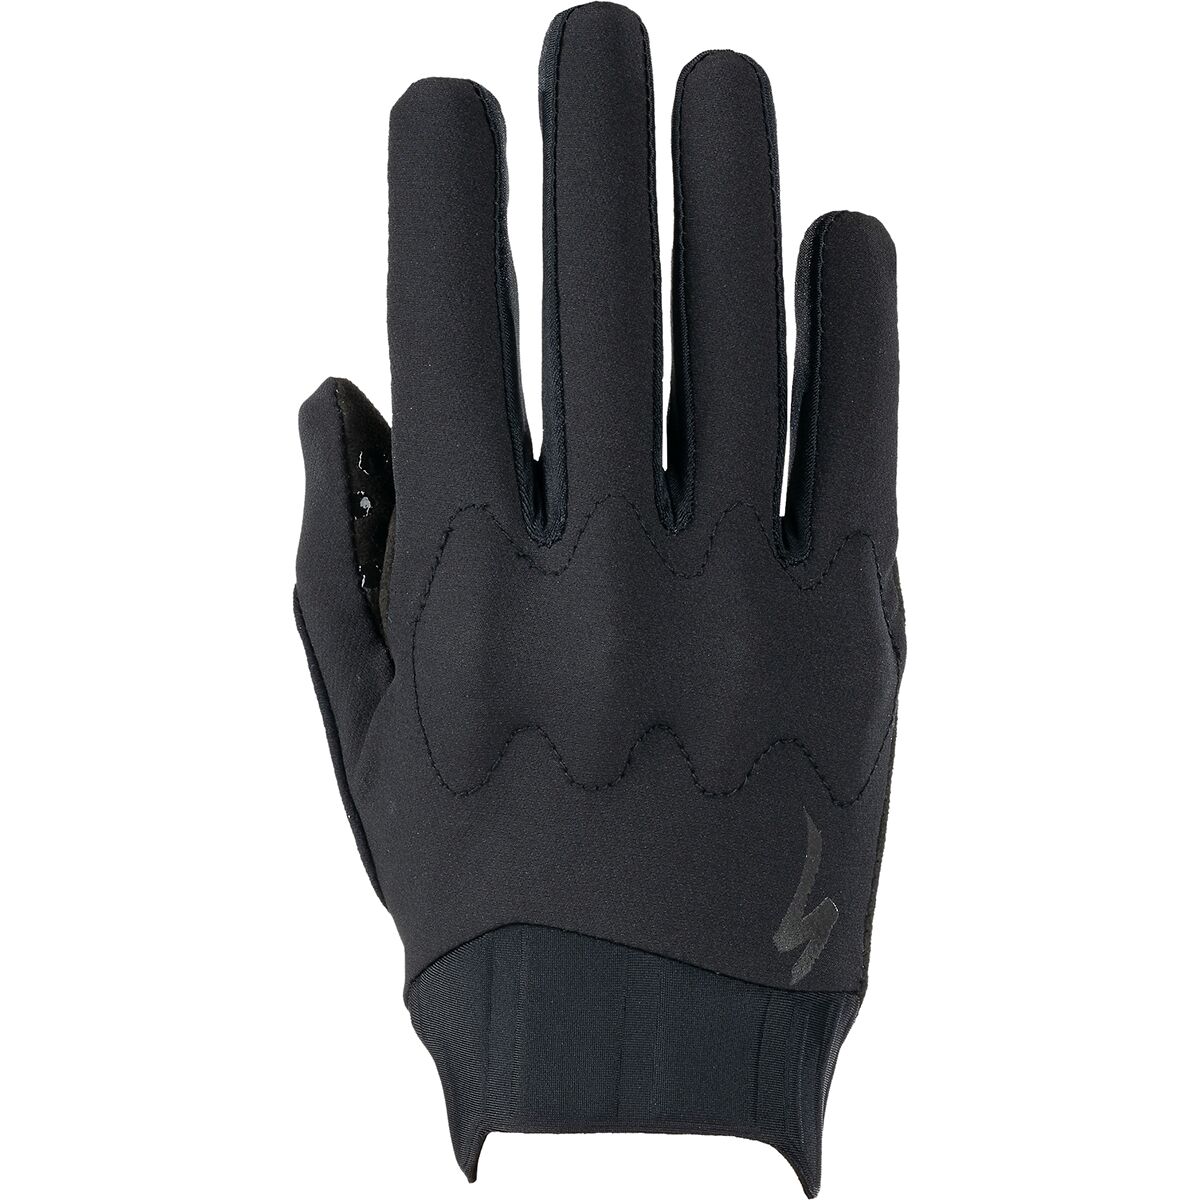 Specialized Trail D3O Long Finger Glove - Men's Black, L